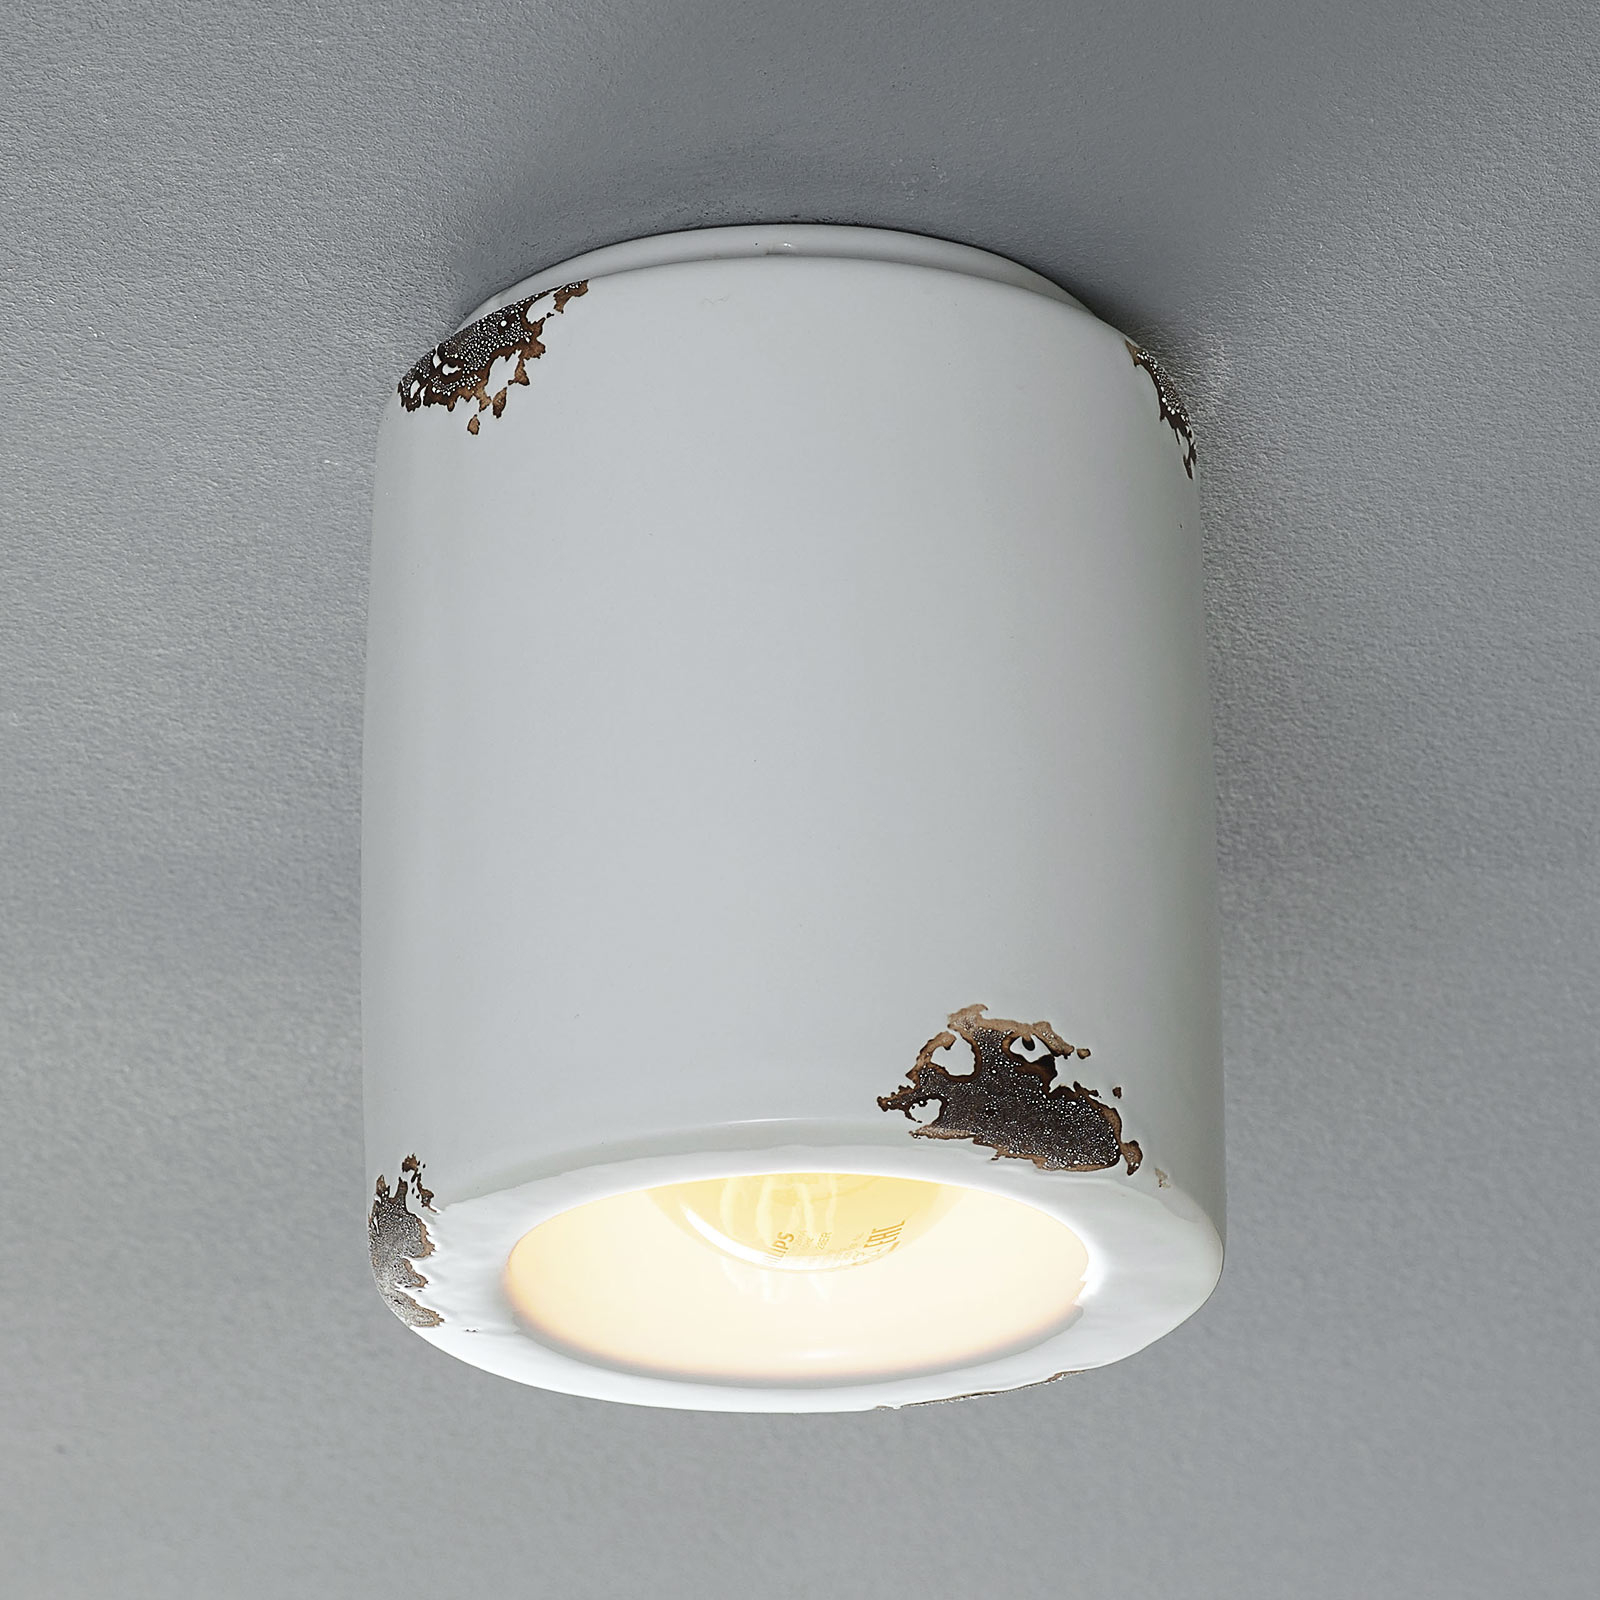 Plafondlamp C986 in vintage-stijl, wit